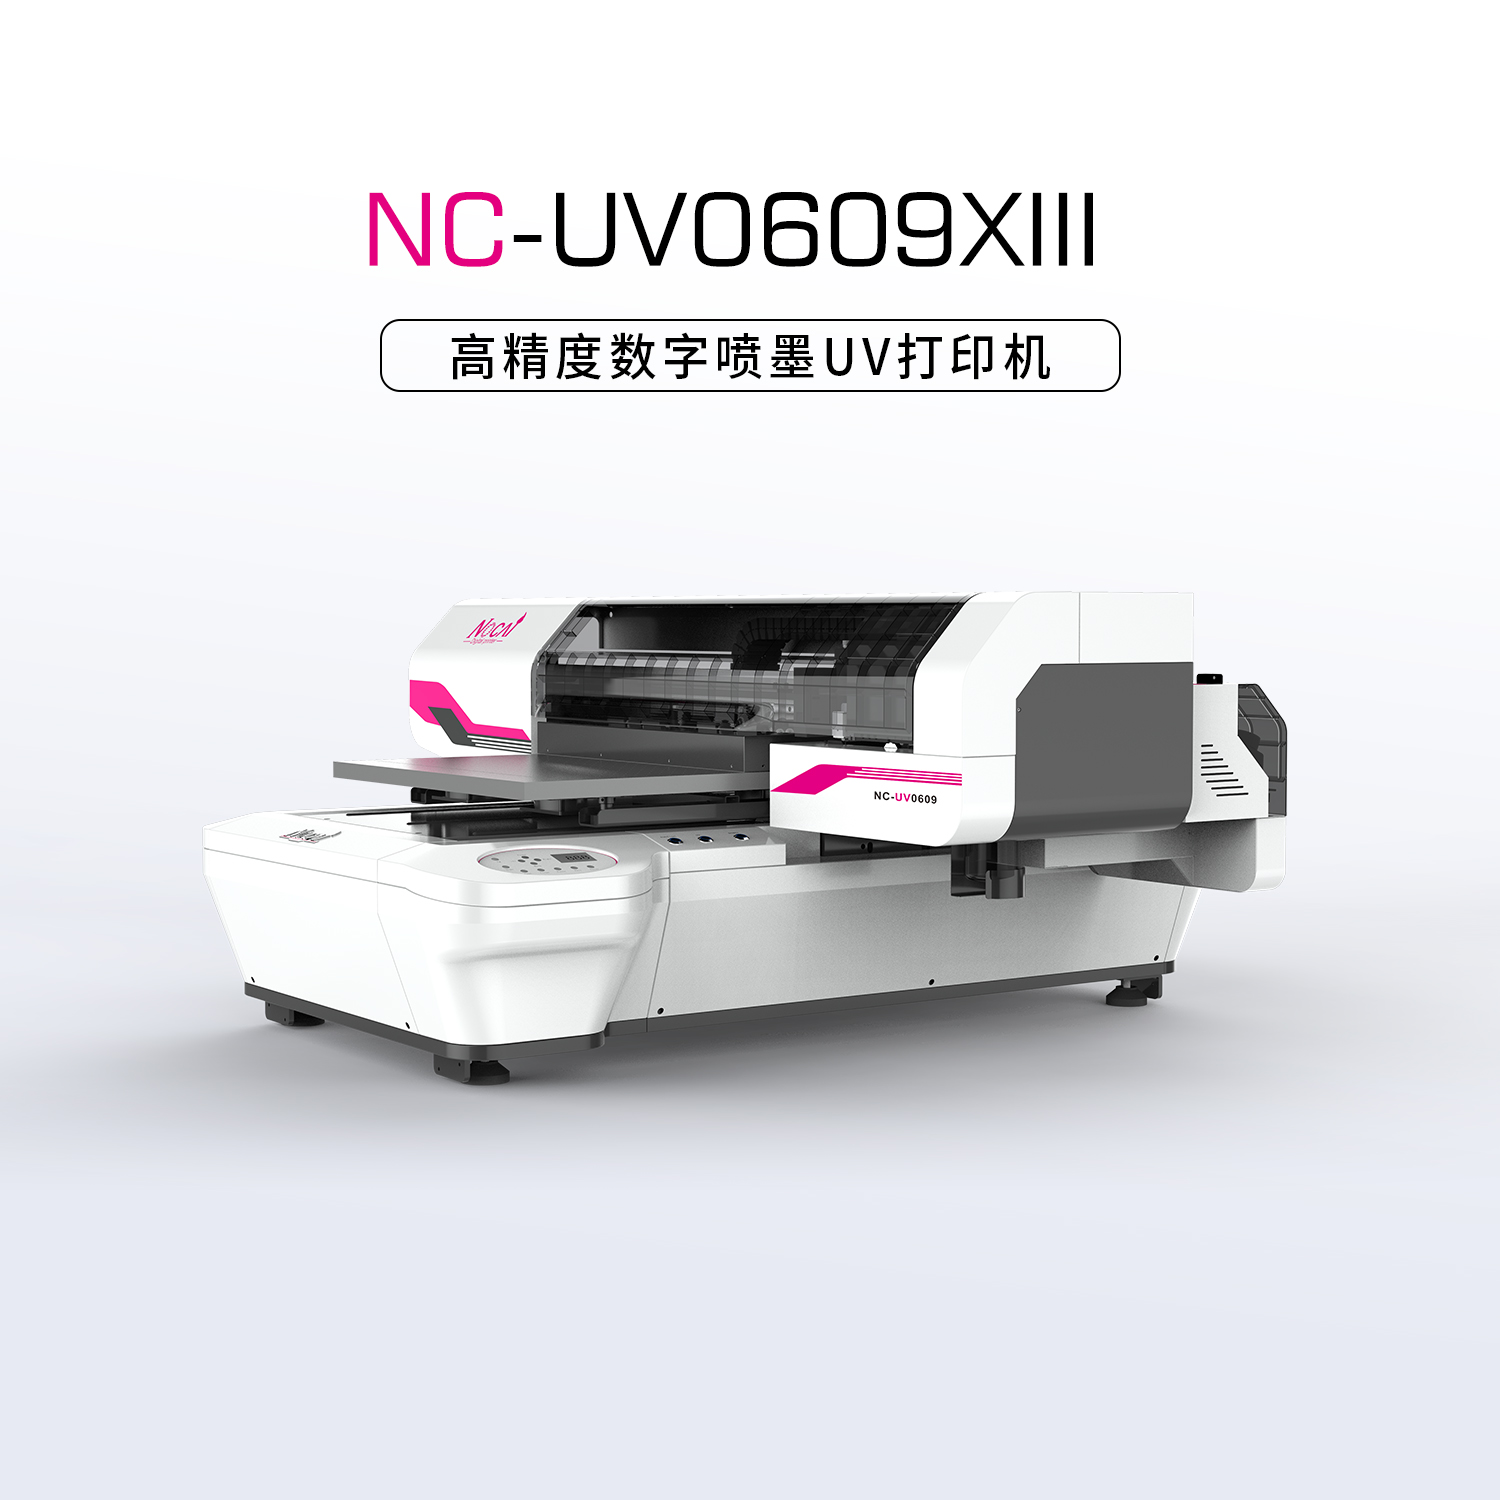 NC-UV0609XIII-小型UV平板打印机